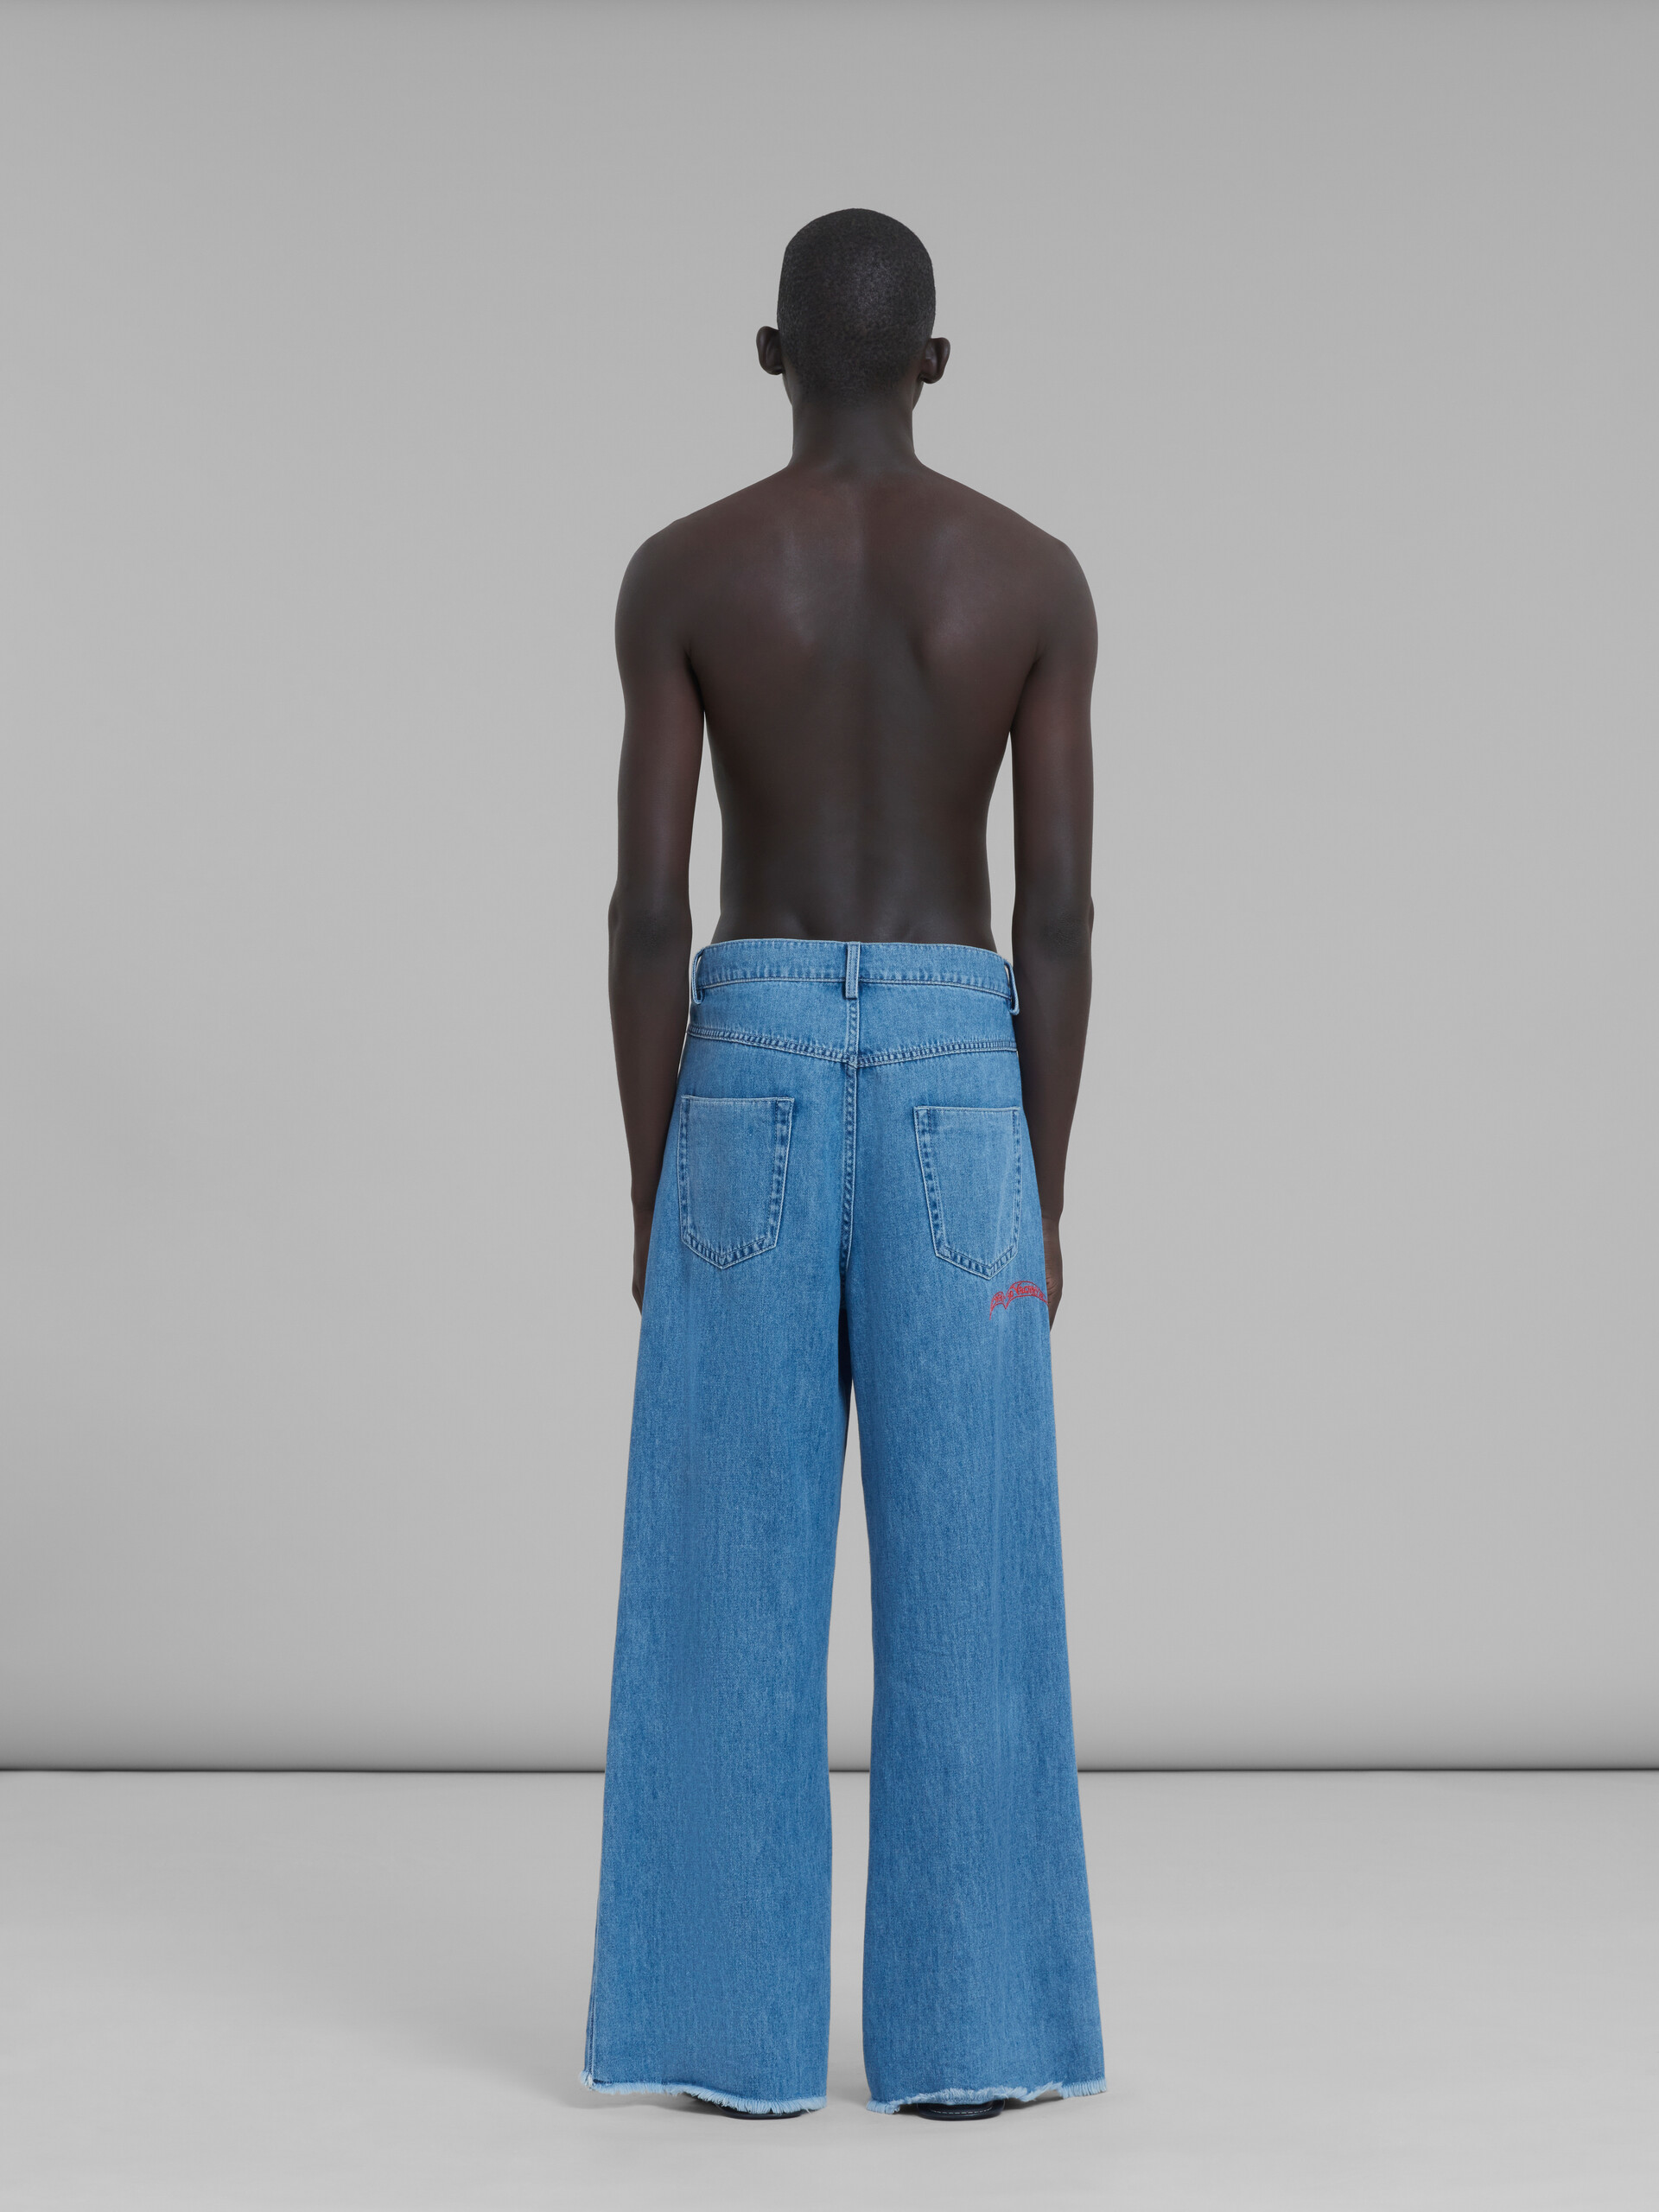 Marni x No Vacancy Inn - Blue chambray 5 pocket pants with embroidery - Pants - Image 3